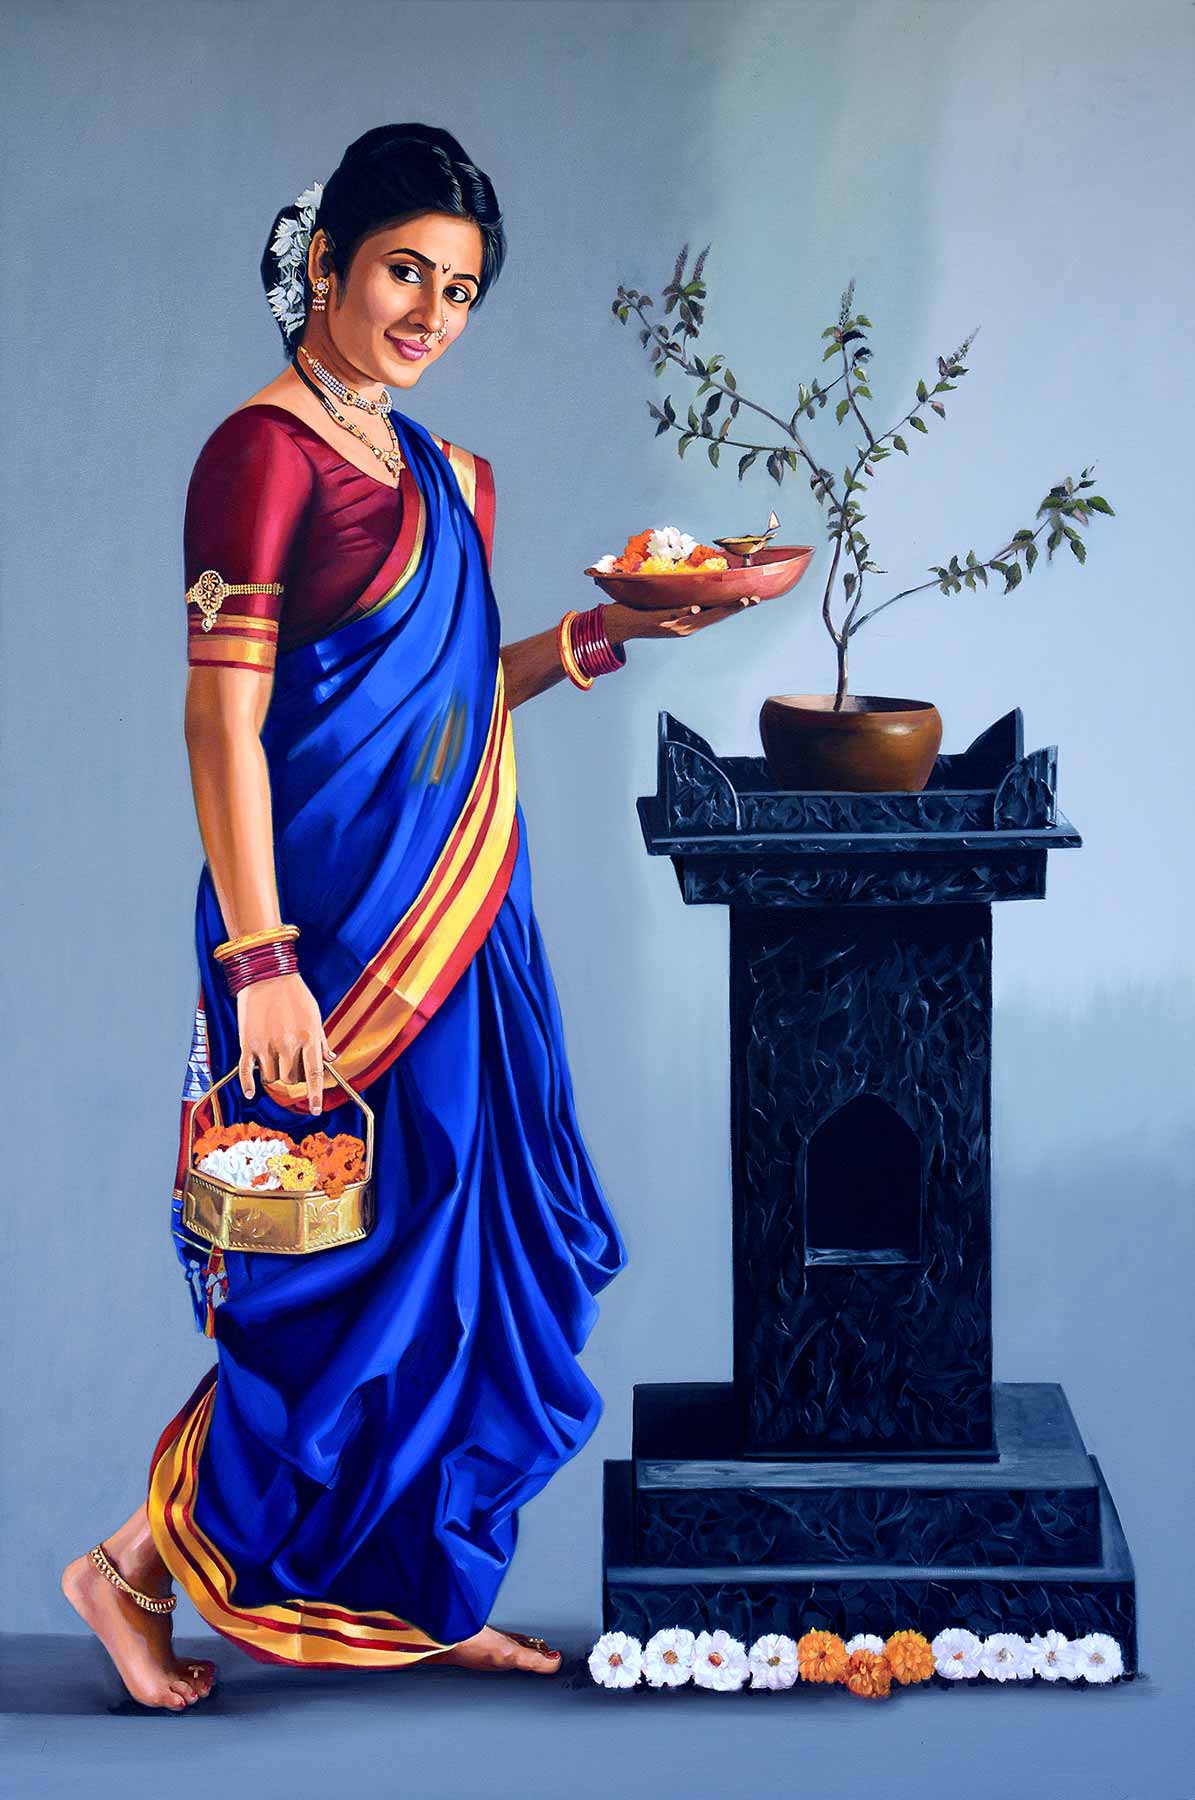 Realism Painting with Oil on Canvas "Vishnupriya" art by Vinayak G Takalkar